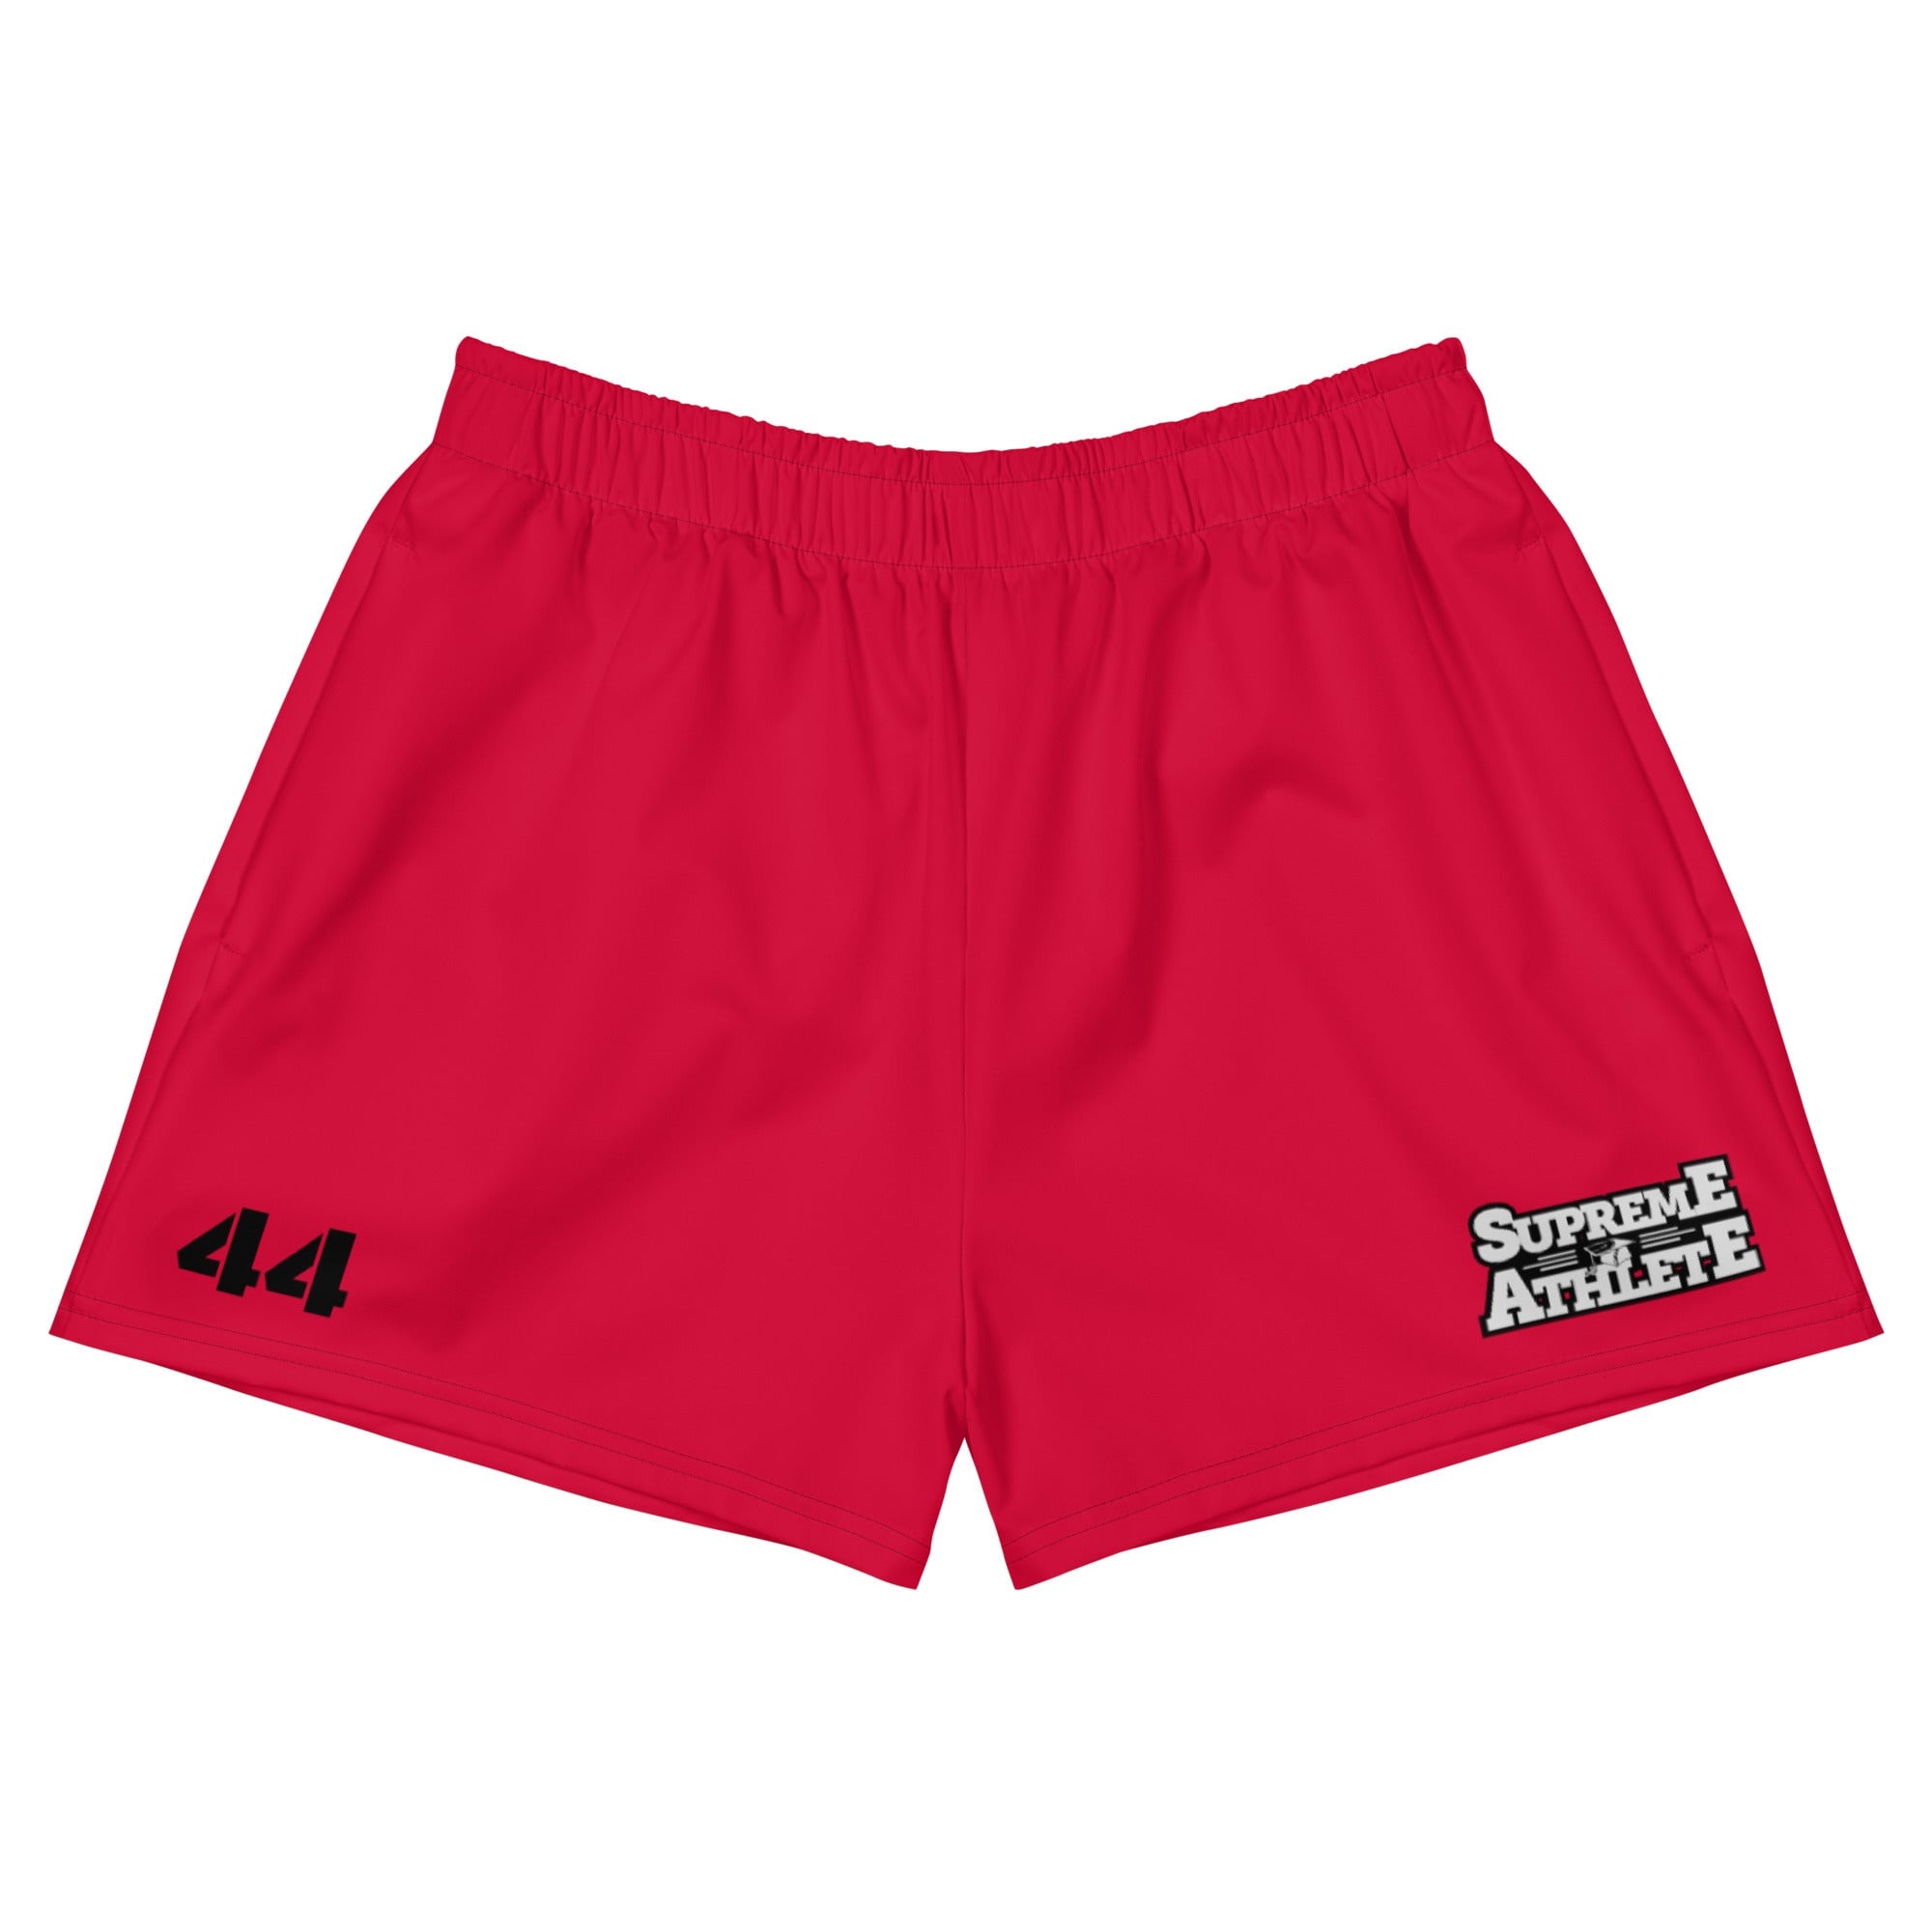 Supreme Women's Athletic Shorts - Supreme Athlete